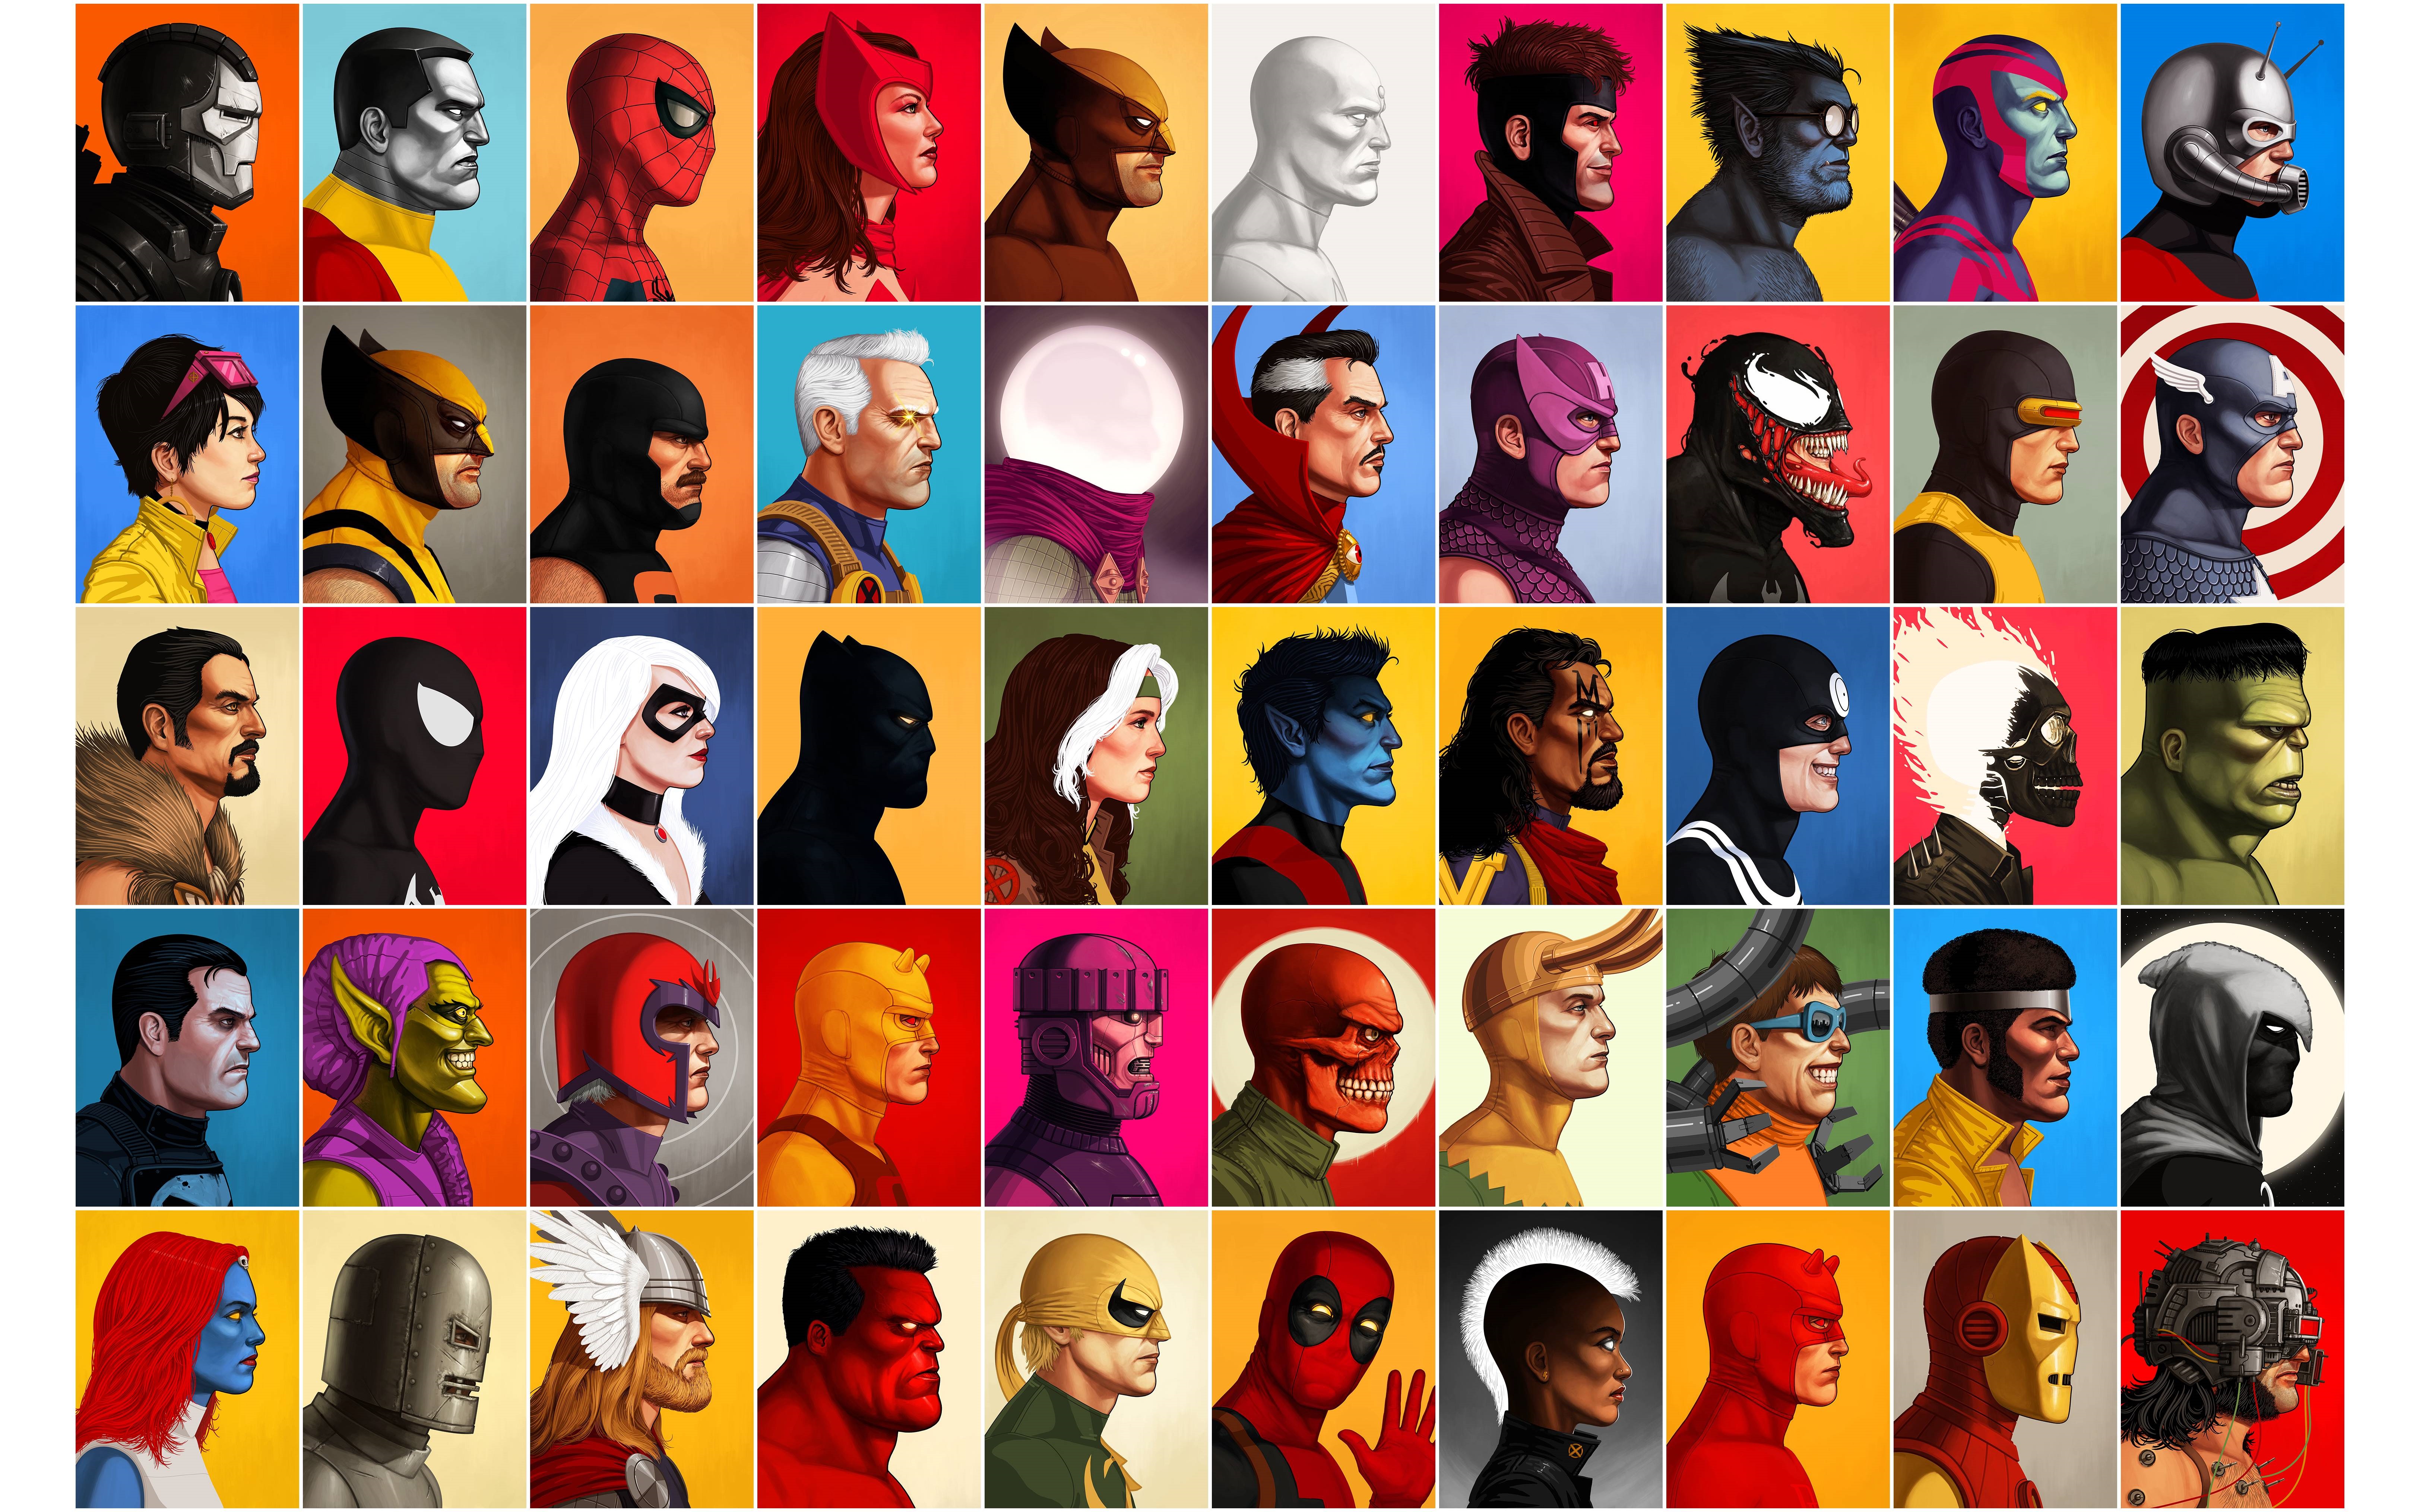 deadpool, daredevil, spider man, hulk, bullseye (marvel comics), cable (marvel comics), puck (marvel comics), wolverine, collage, archangel (marvel comics), loki (marvel comics), scarlet witch, black panther (marvel comics), comics, ant man, beast (marvel comics), black cat (marvel comics), captain america, clint barton, colossus, cyclops (marvel comics), doctor octopus, doctor strange, galactus, gambit (marvel comics), green goblin, hawkeye, iron fist (marvel comics), iron man, jubilee (marvel comics), magneto (marvel comics), moon knight, mystique (marvel comics), nightcrawler (marvel comics), punisher, red hulk, red skull (marvel comics), rogue (marvel comics), silver surfer, storm (marvel comics), thor, venom, war machine, weapon x (marvel comics) phone background